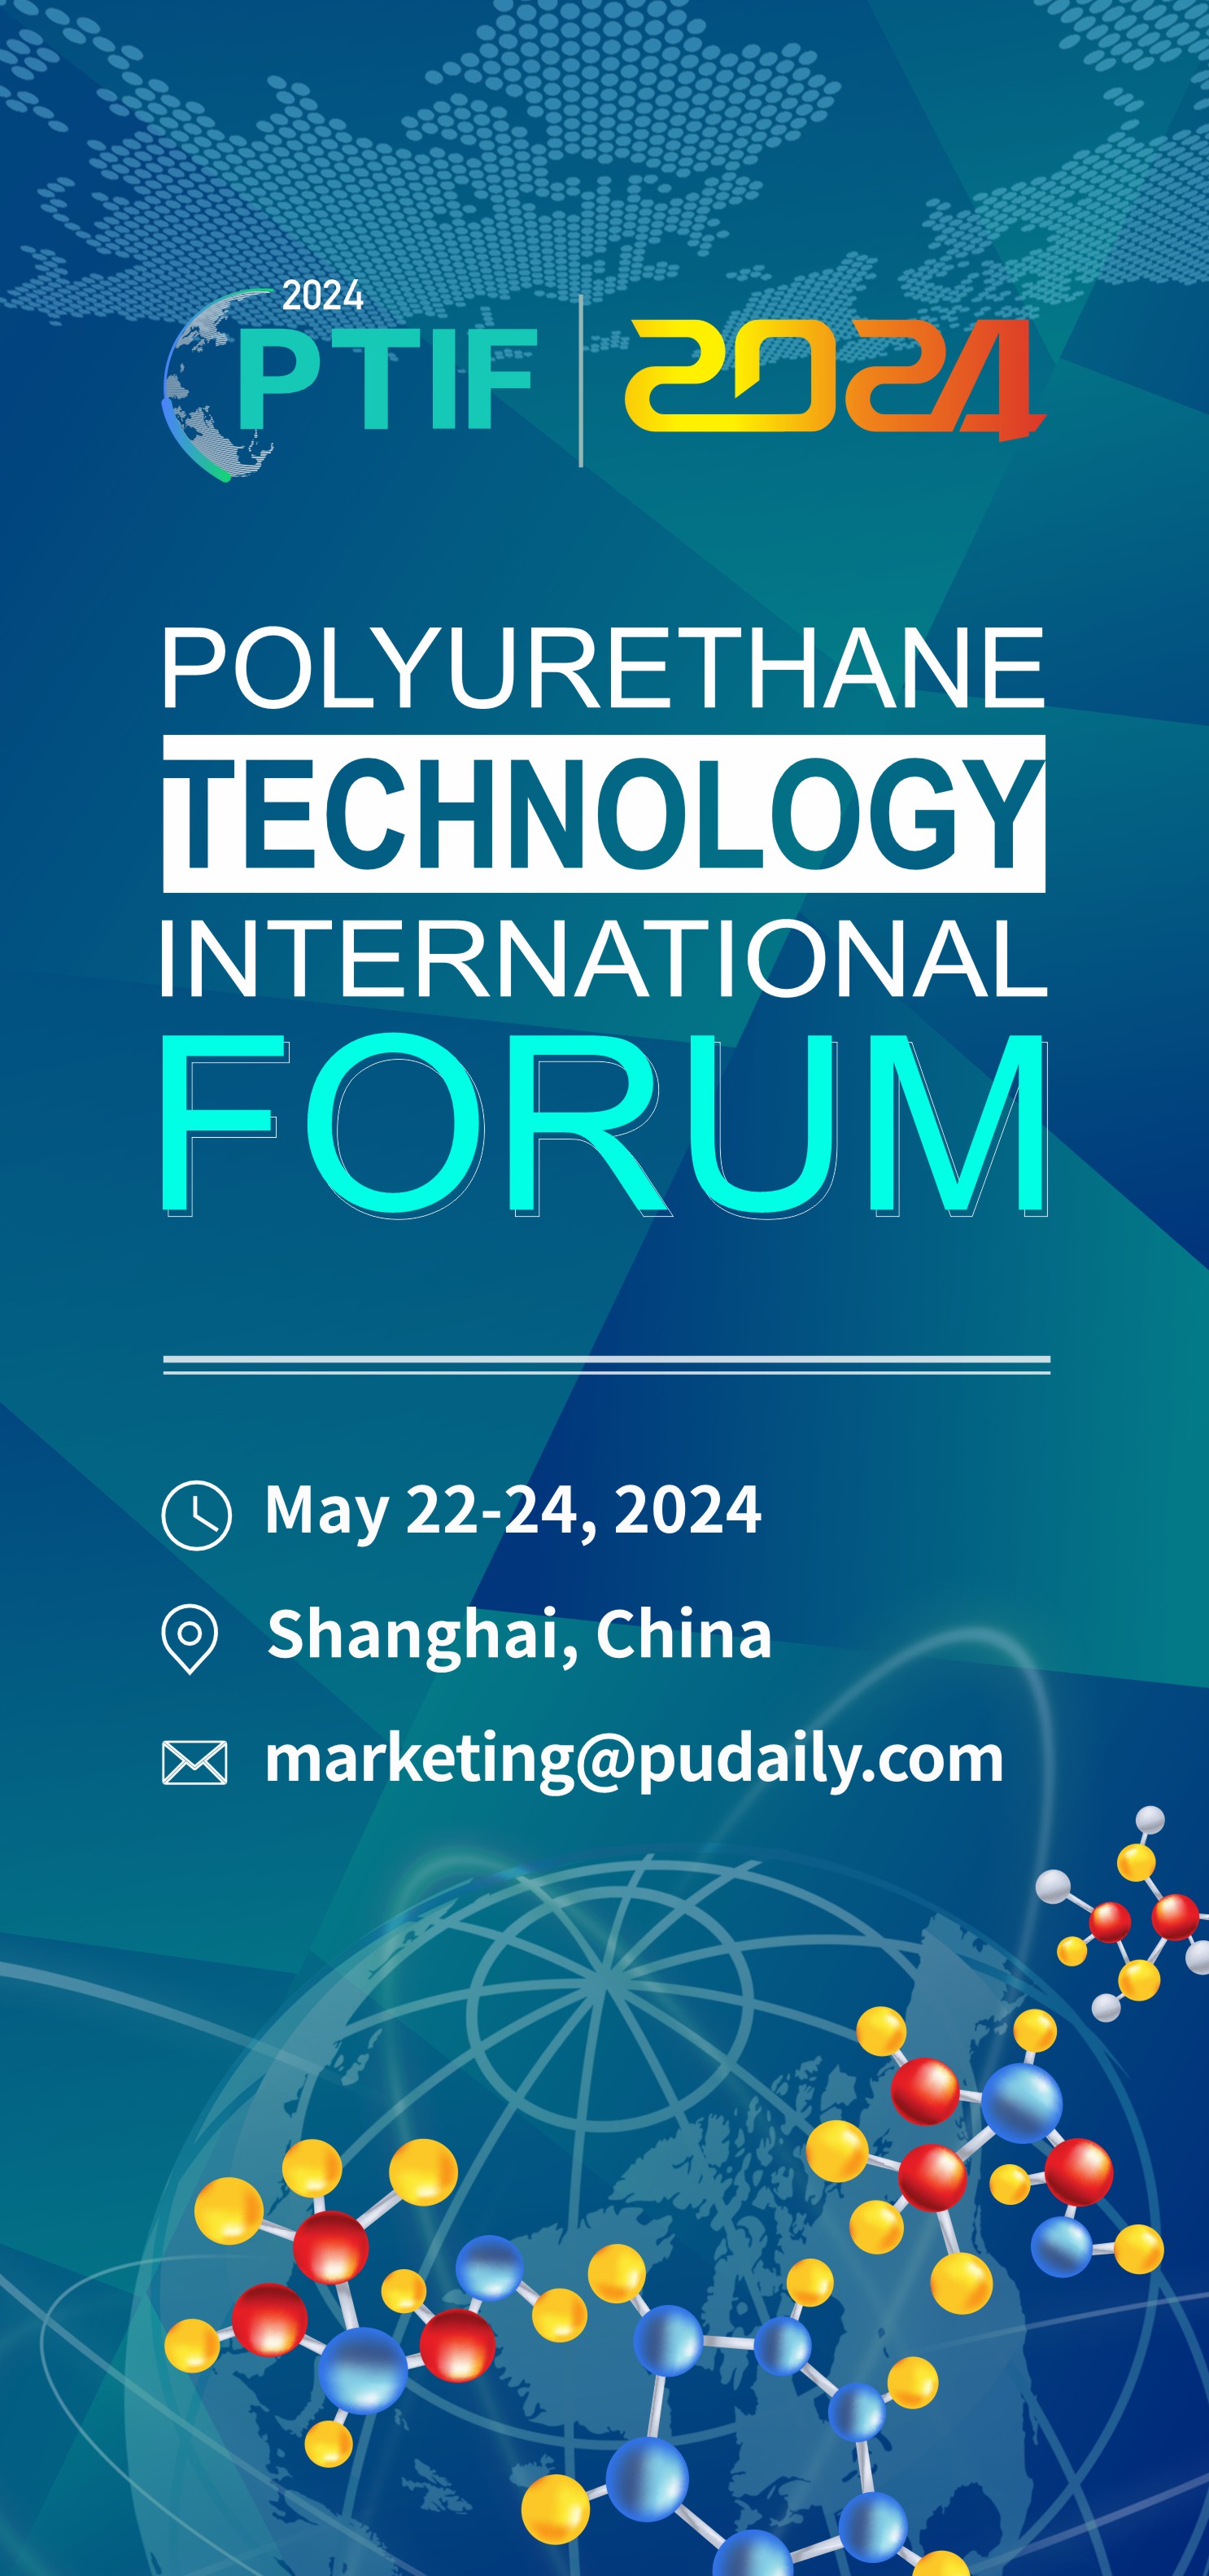 Polyurethane Technology International Forum 2024